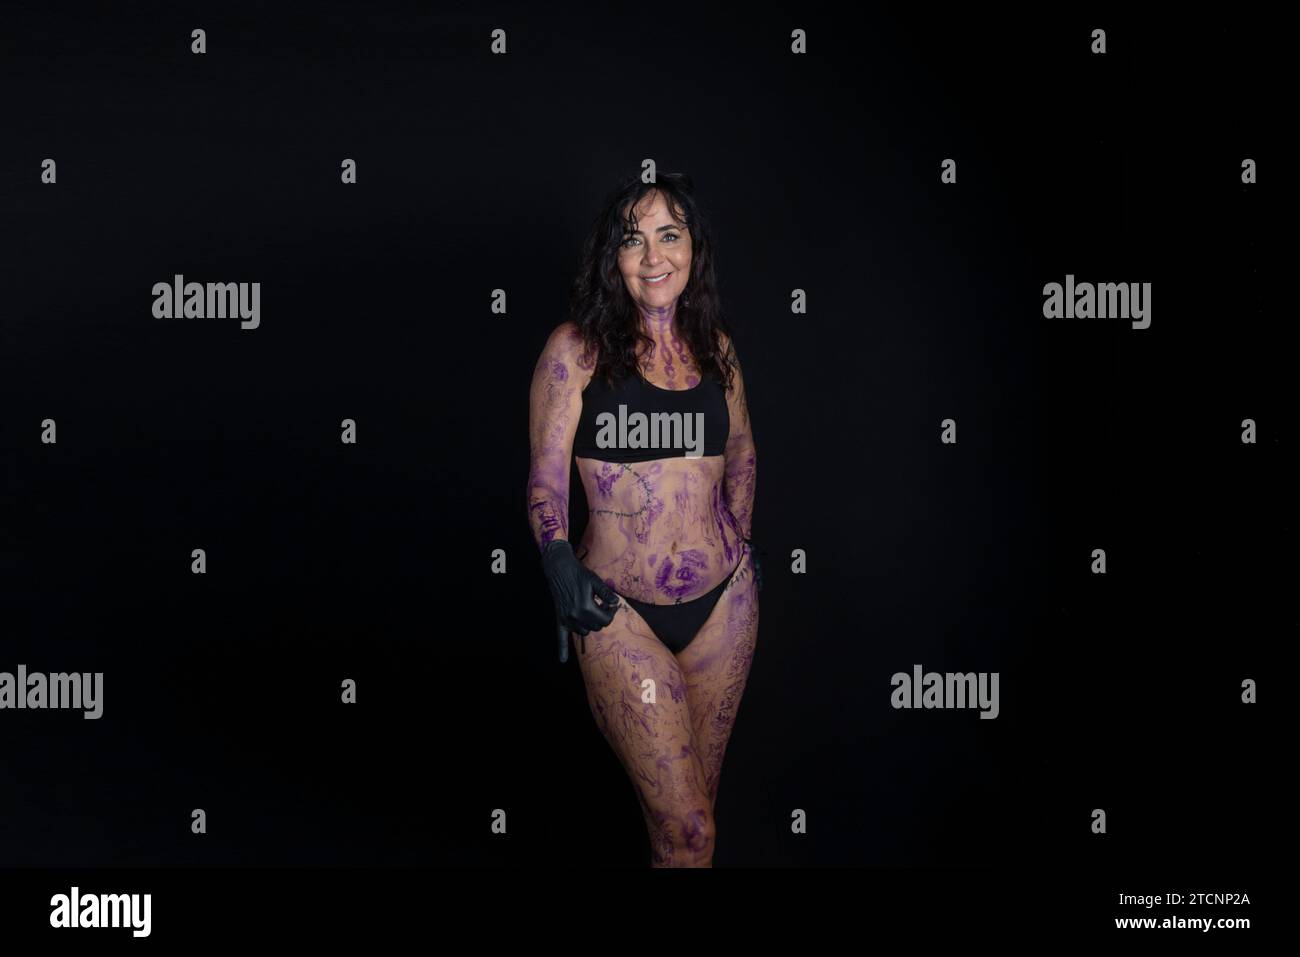 Beautiful woman wearing black bikini with painted and tattooed body against black background. Stock Photo